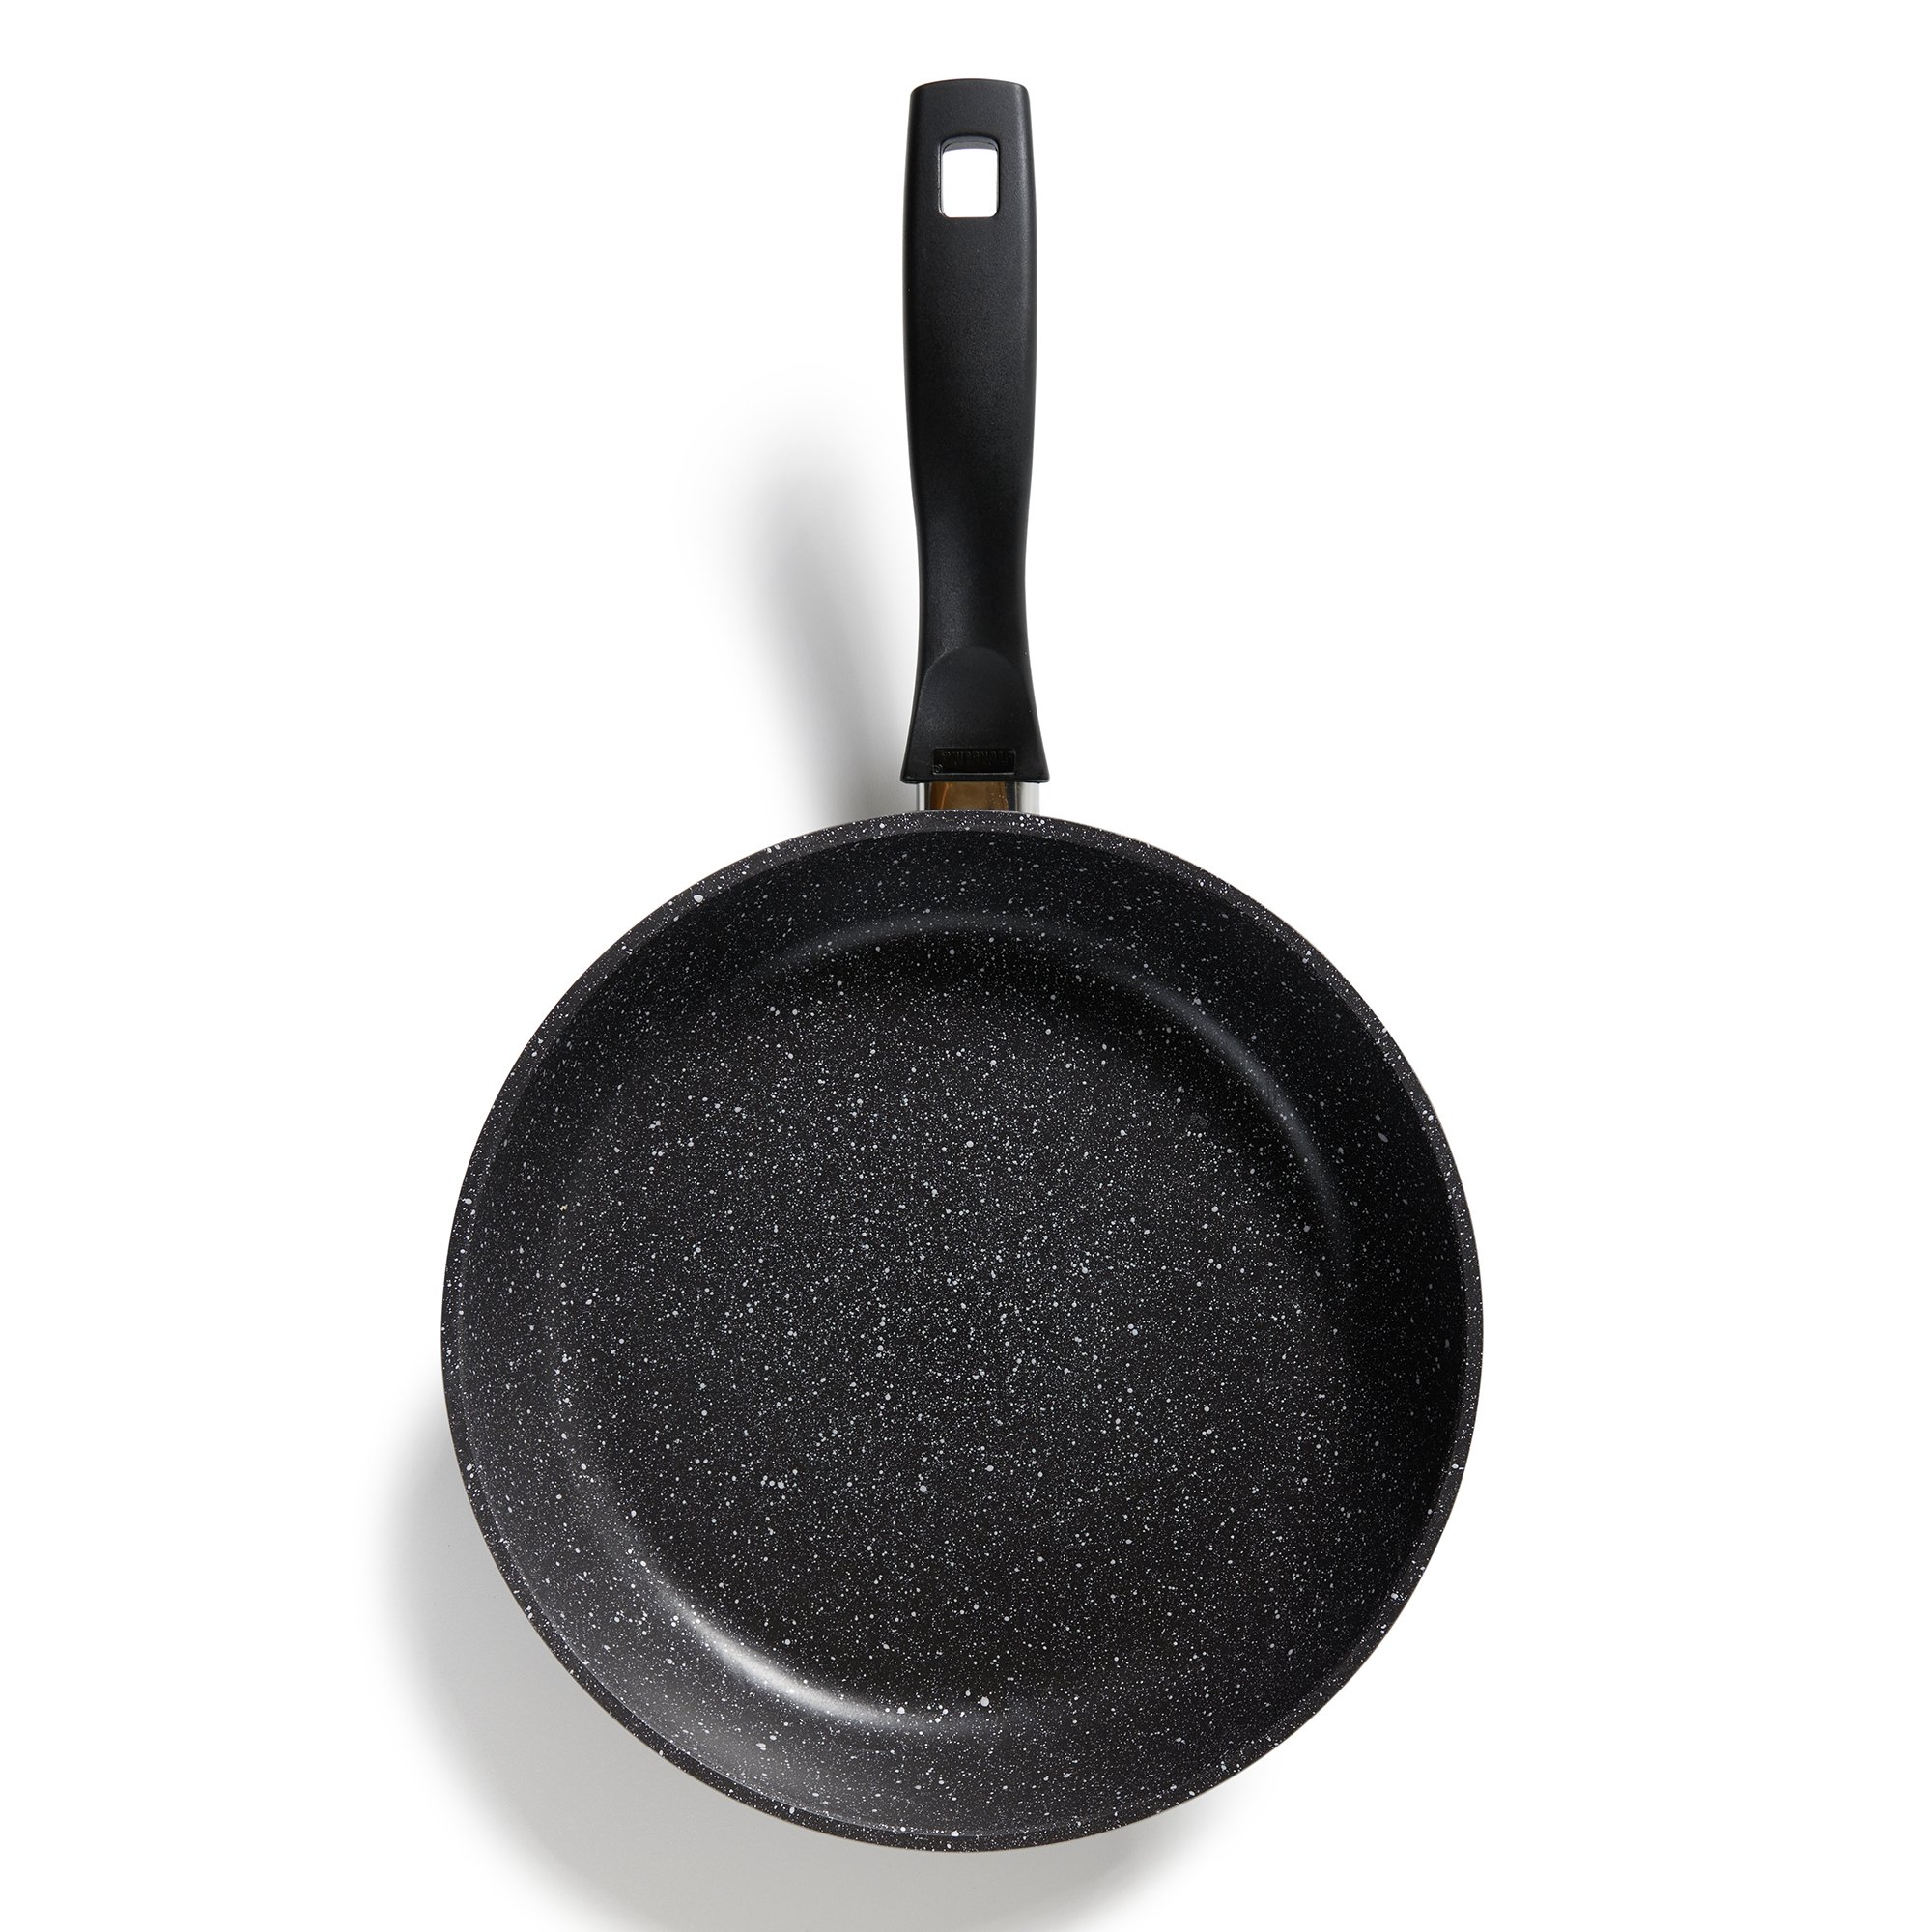 STONELINE® Frying Pan 26 cm, Non-Stick Pan | CLASSIC